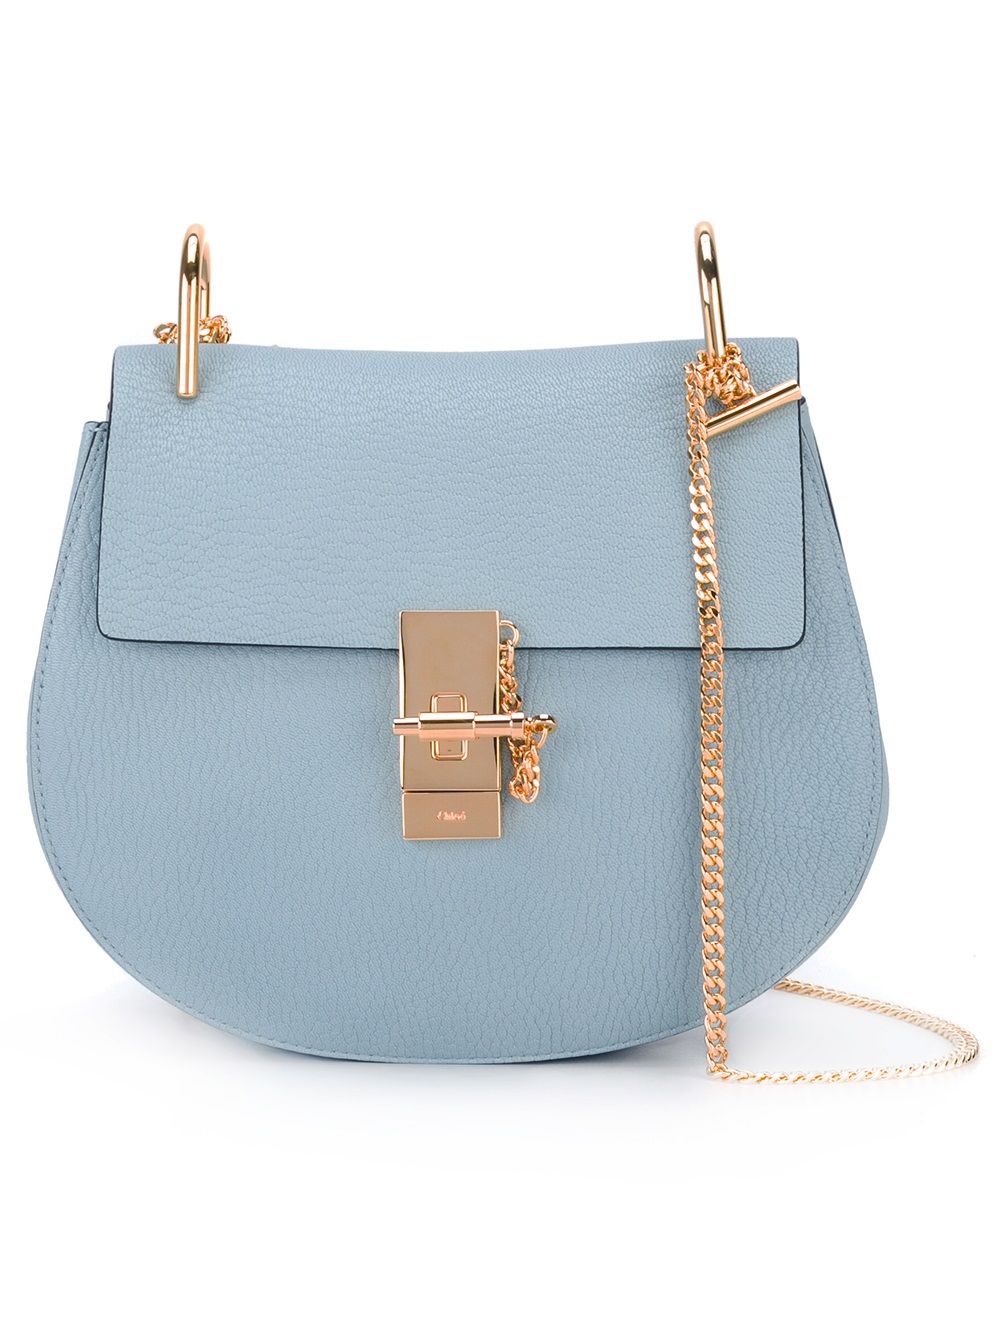 Pin by Lyzah on Handbags | Bags, Luxury cross body bag, Shoulder bag